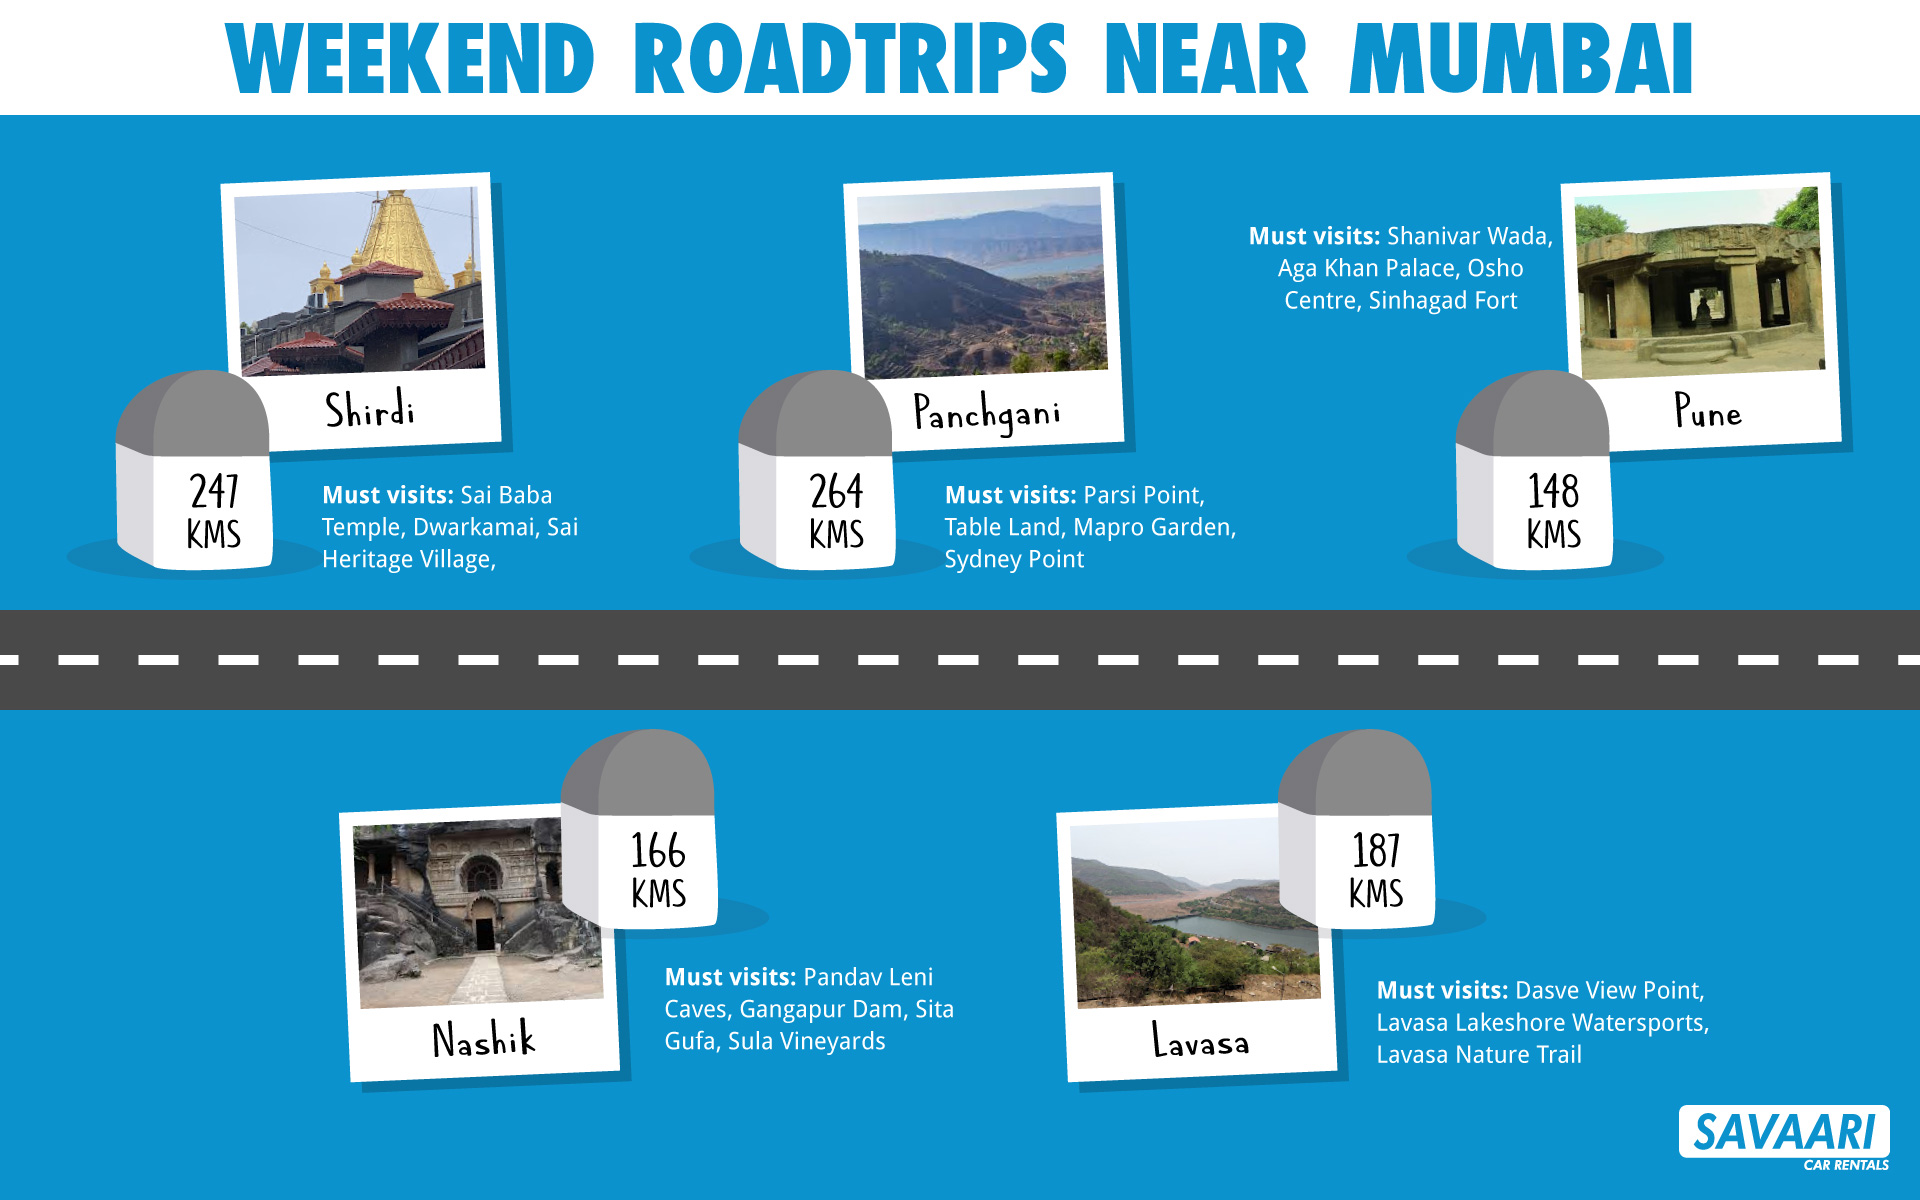 Weekend Road Trips near Mumbai